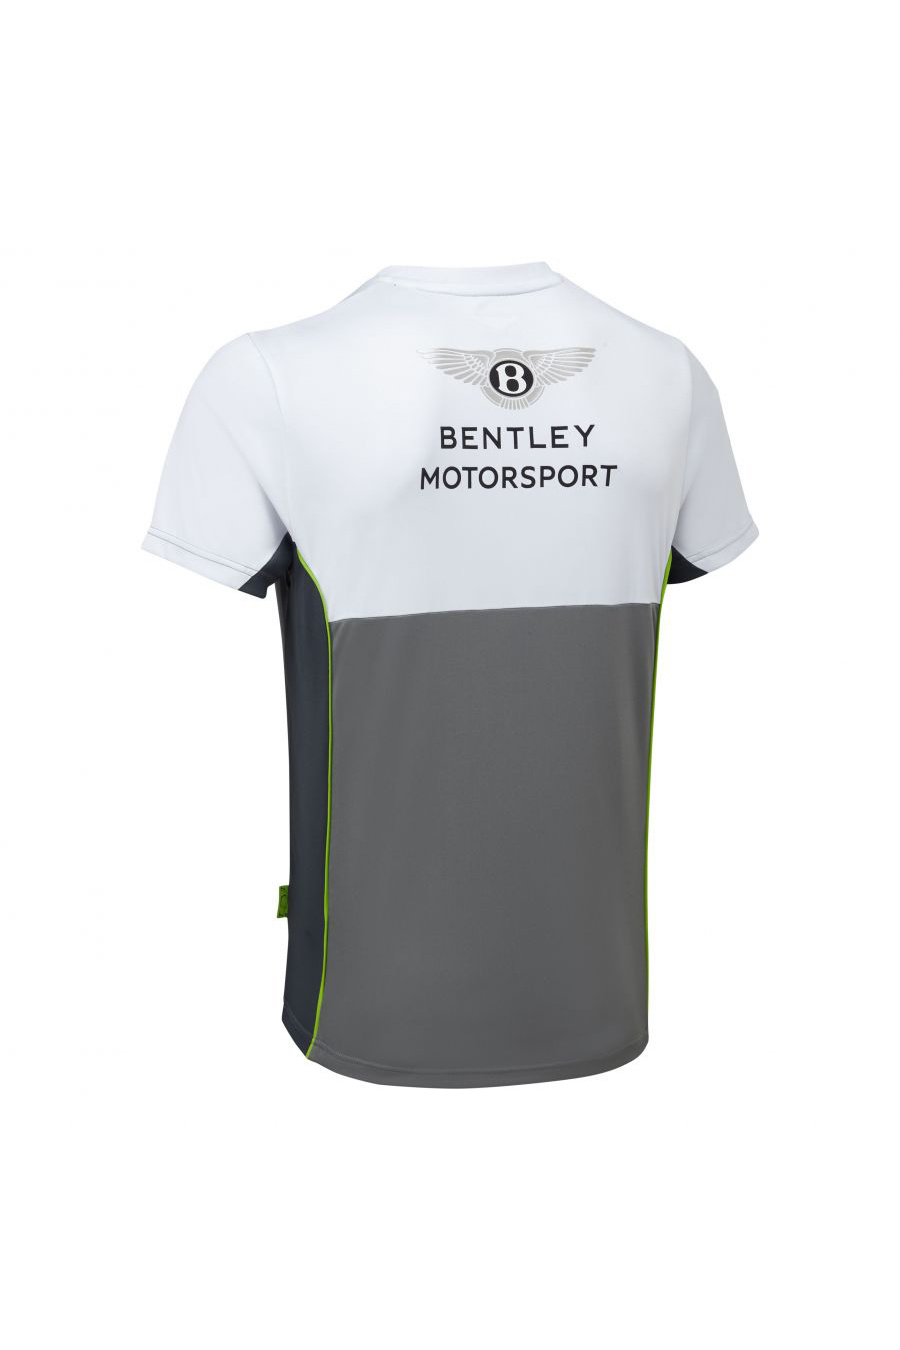 Bentley Team T-shirt Grau